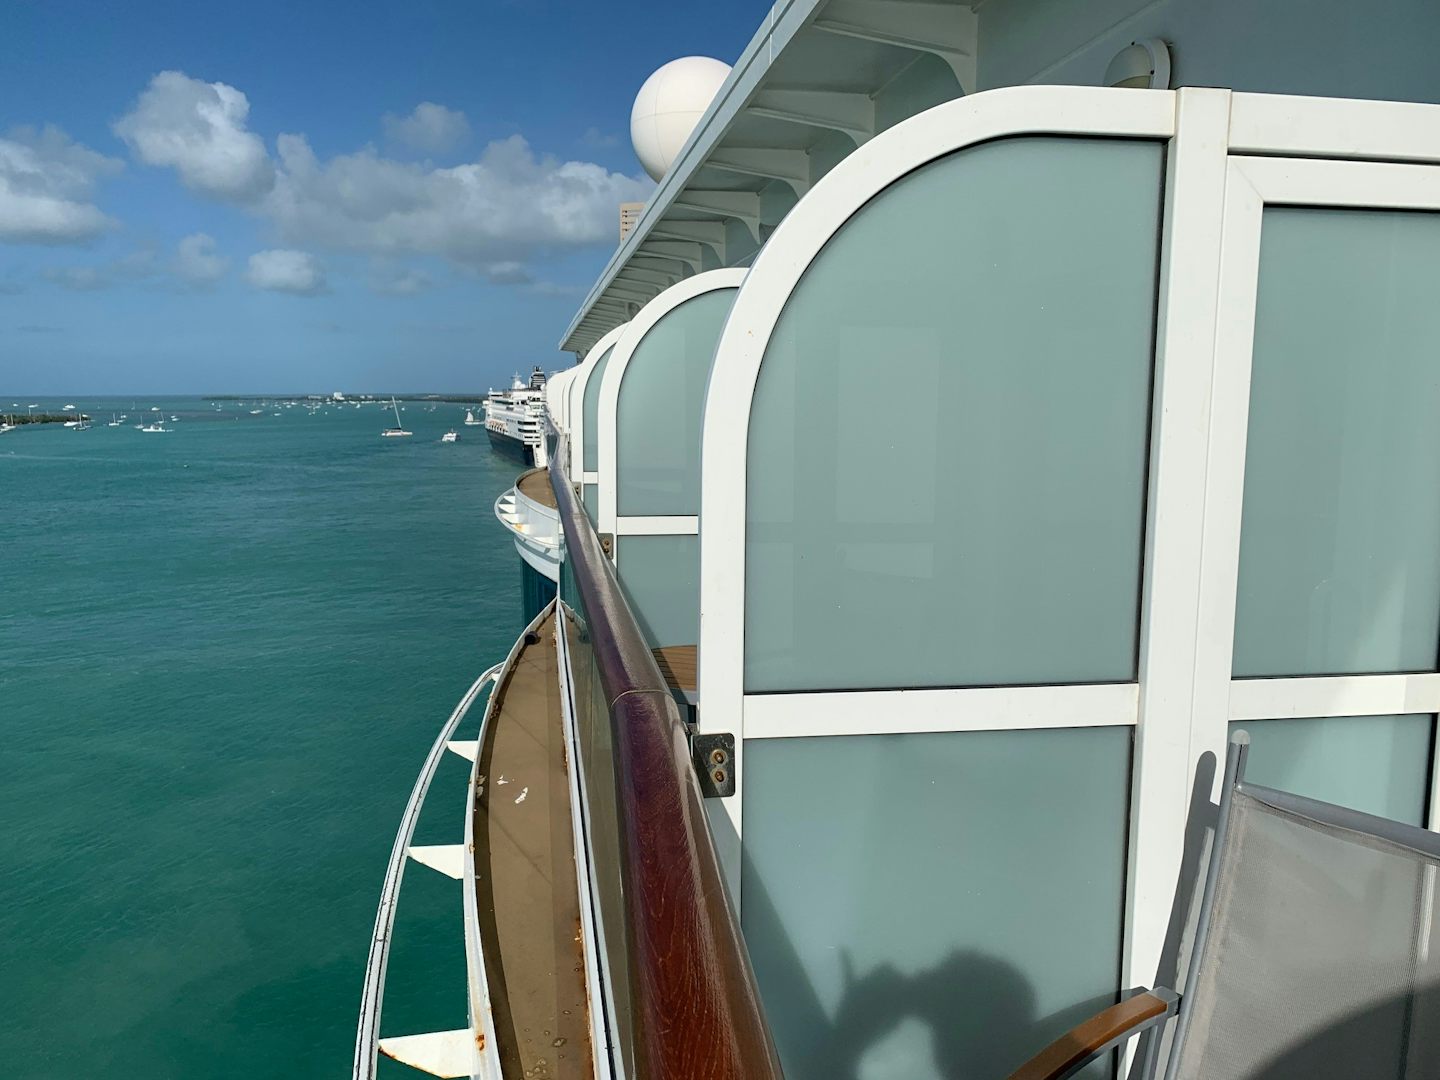 Larger Aqua Class balconies on deck 11.